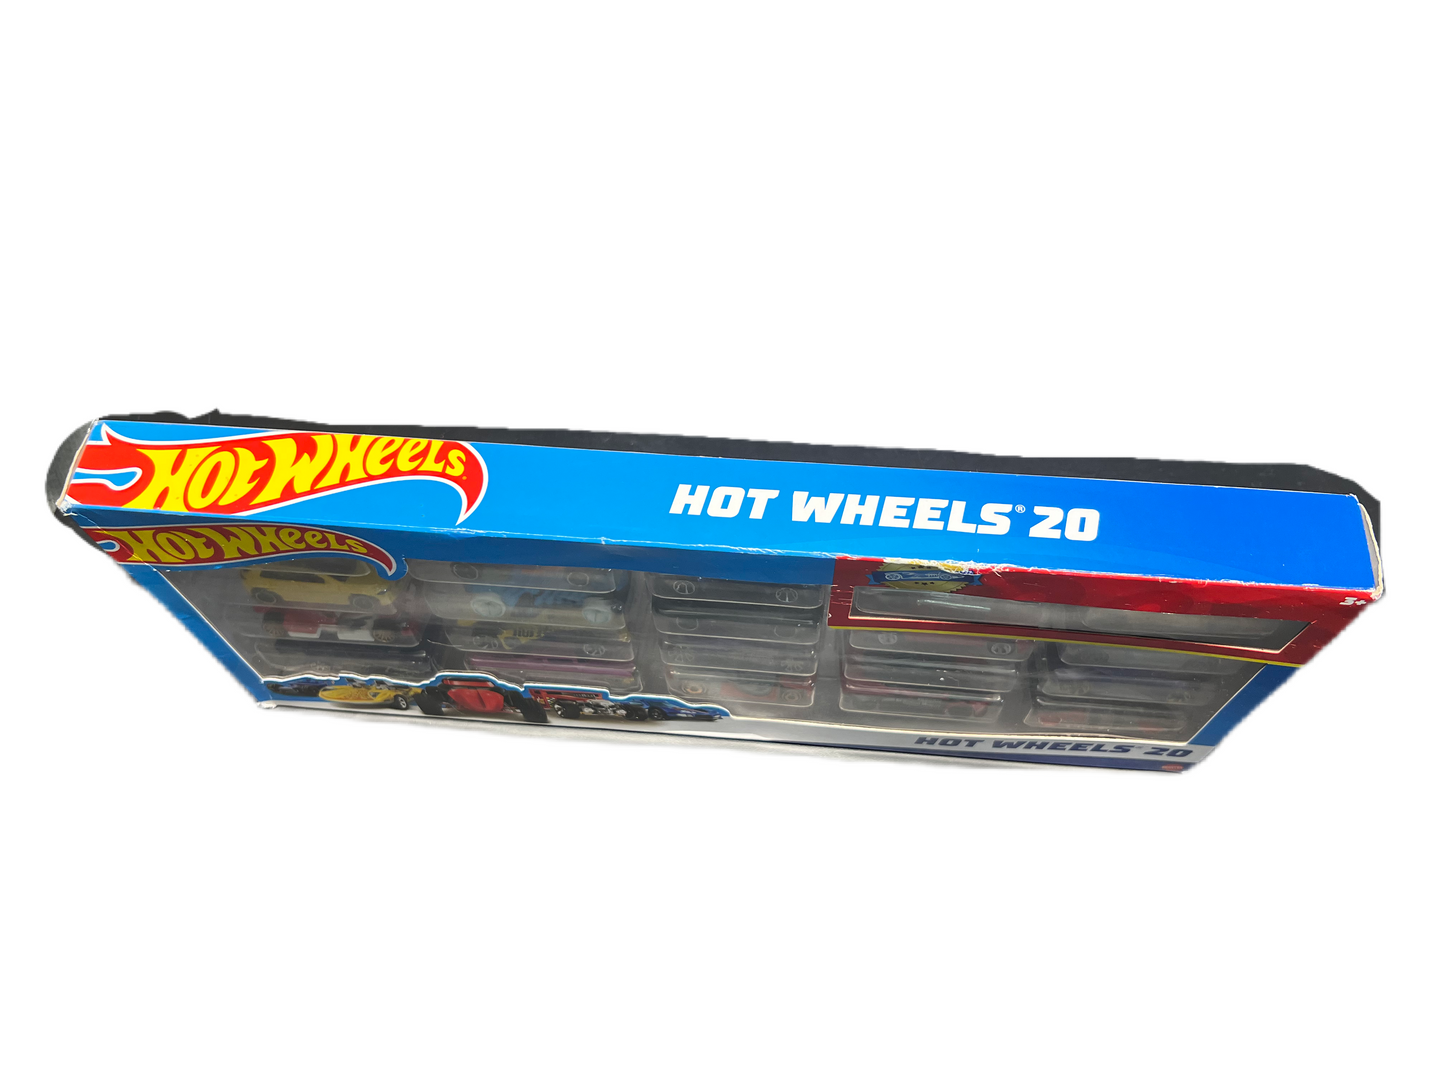 Hot Wheels 20